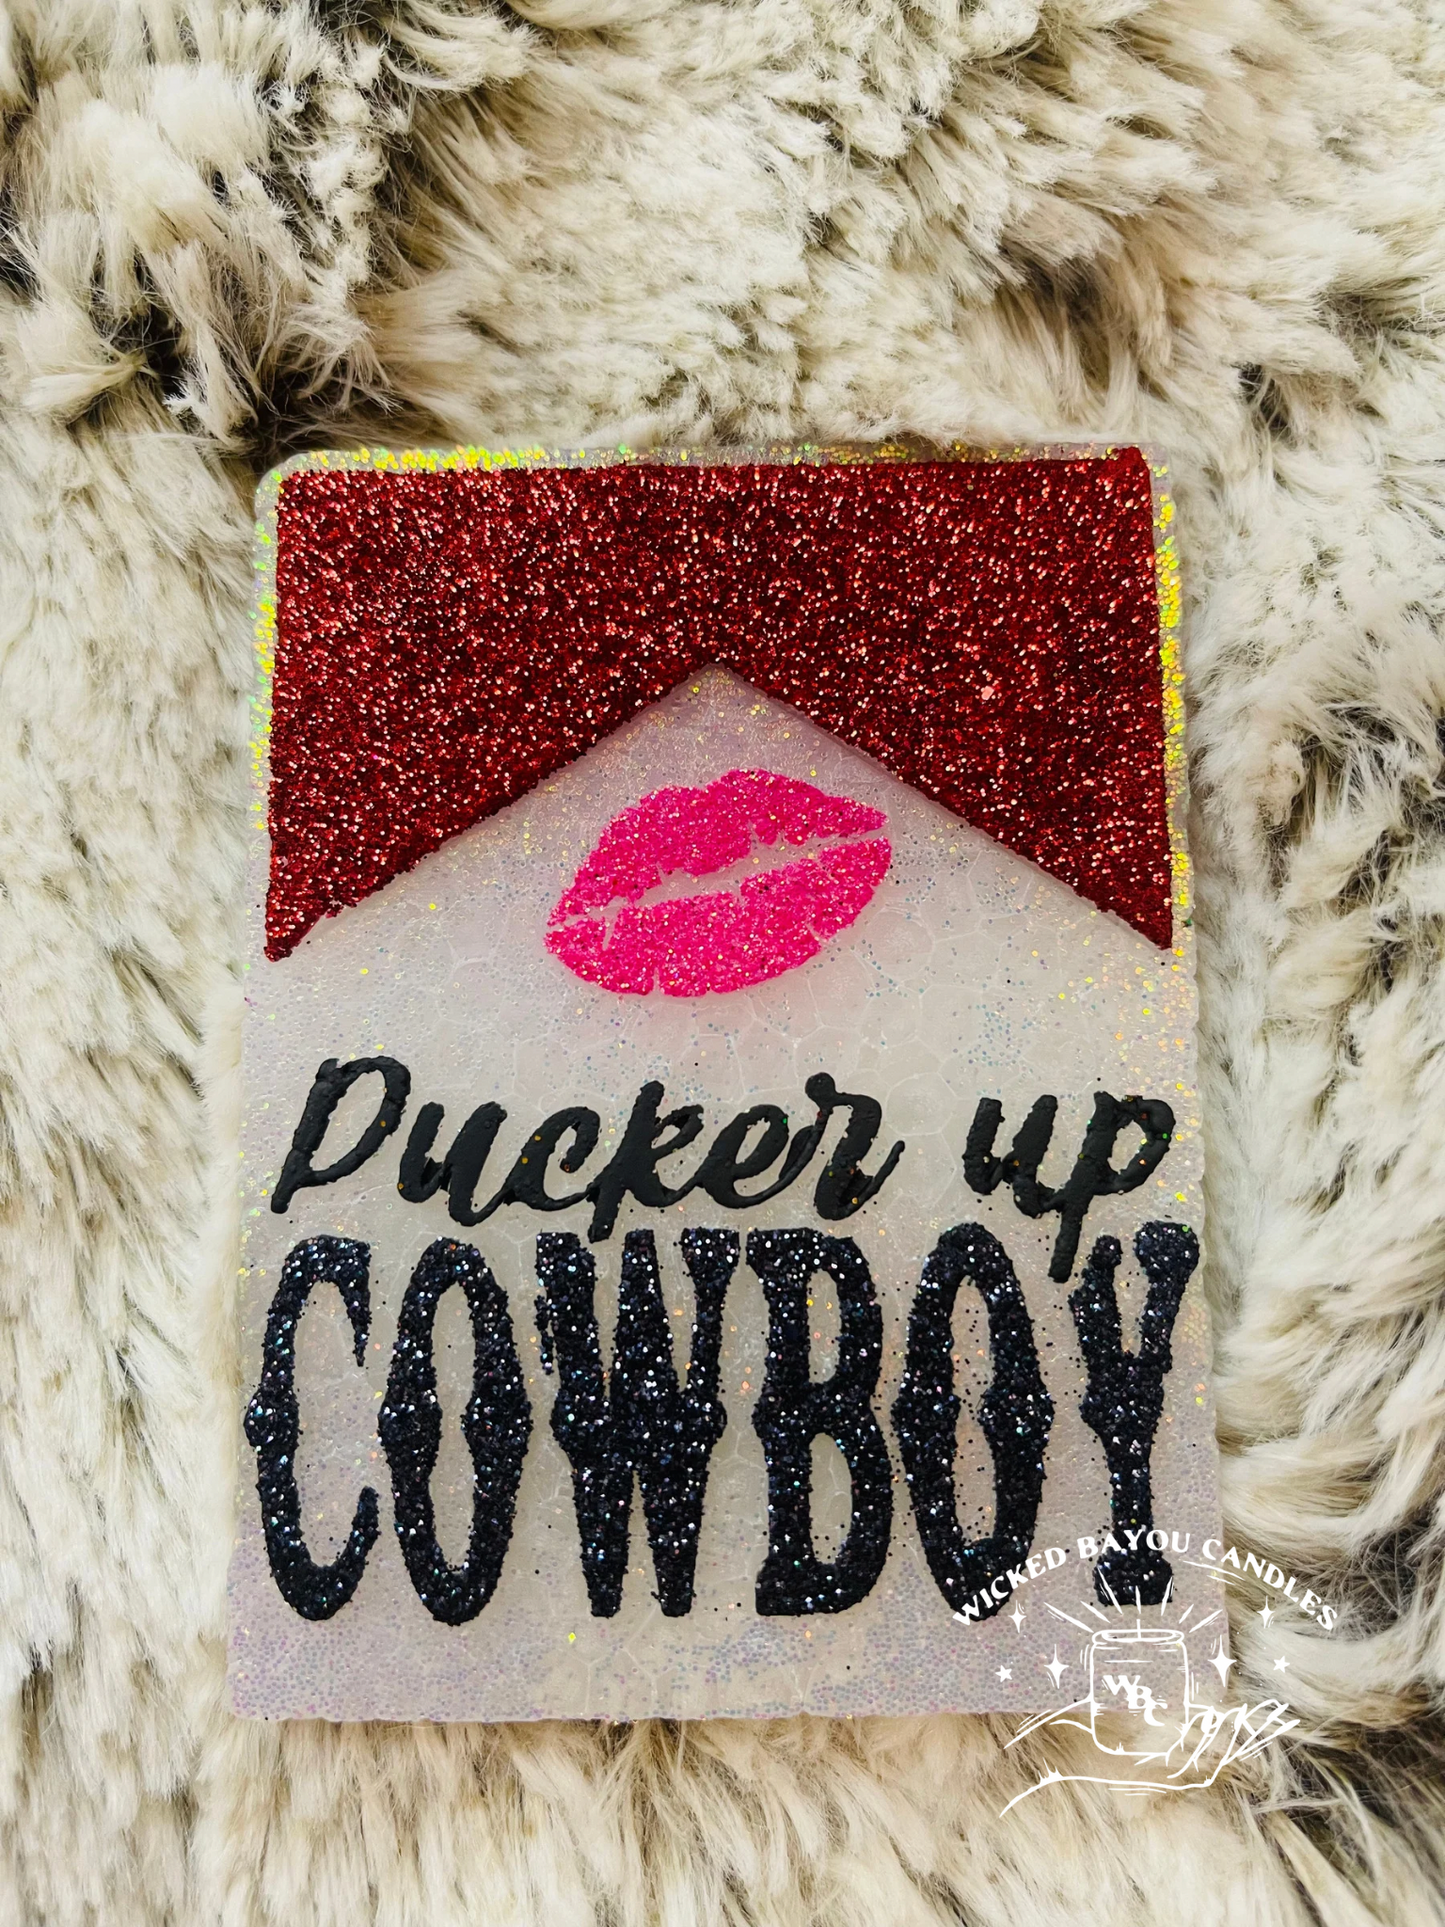 Pucker Up Cowboy freshener